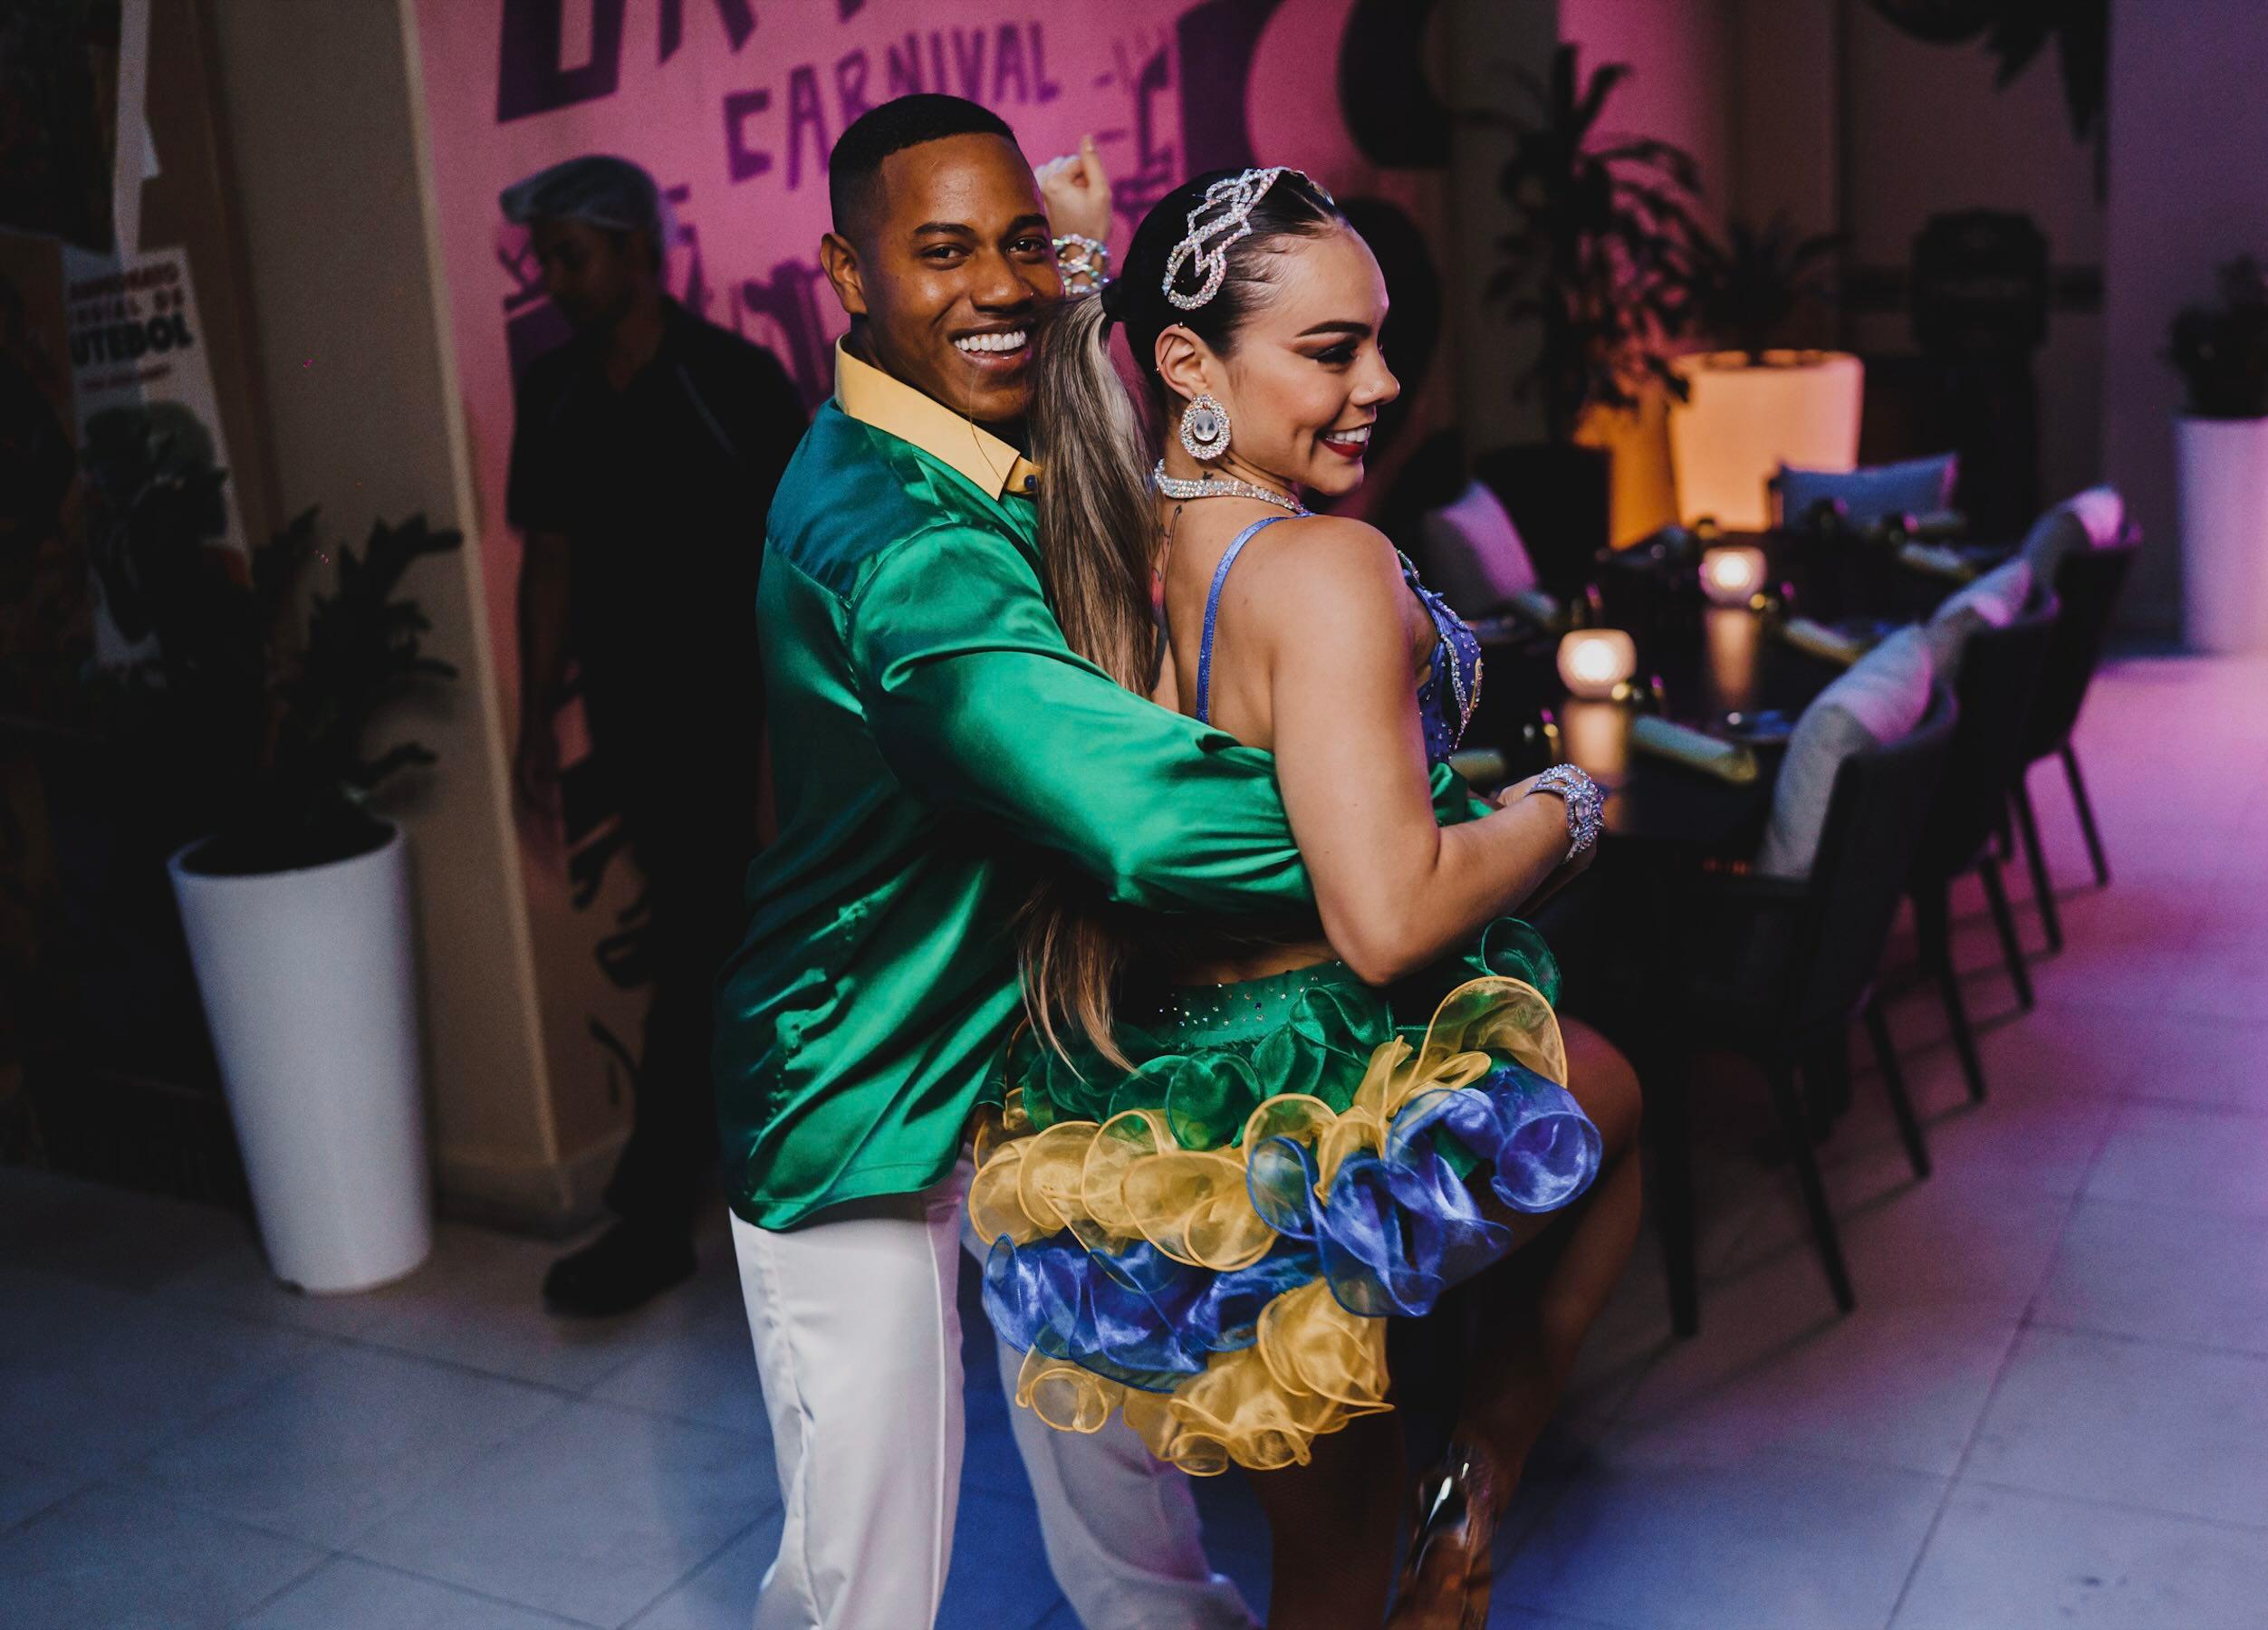 Fogueira’s Rhythm of Rio Carnaval promises a taste of Brazil